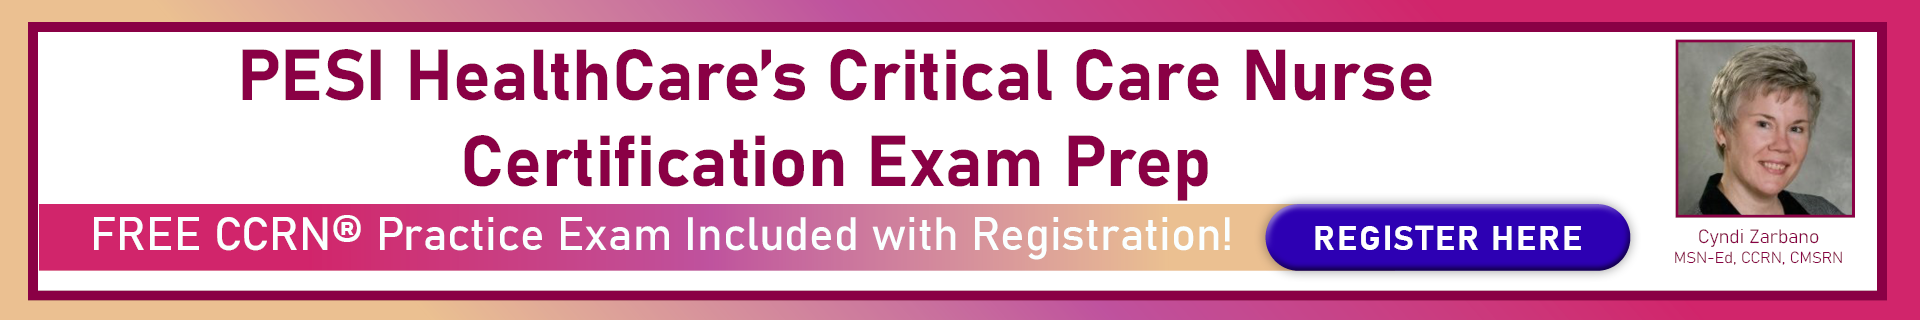 PESI HealthCare's Critical Care Nurse Certification Exam Prep: Your Guide to Passing the CCRN® Exam